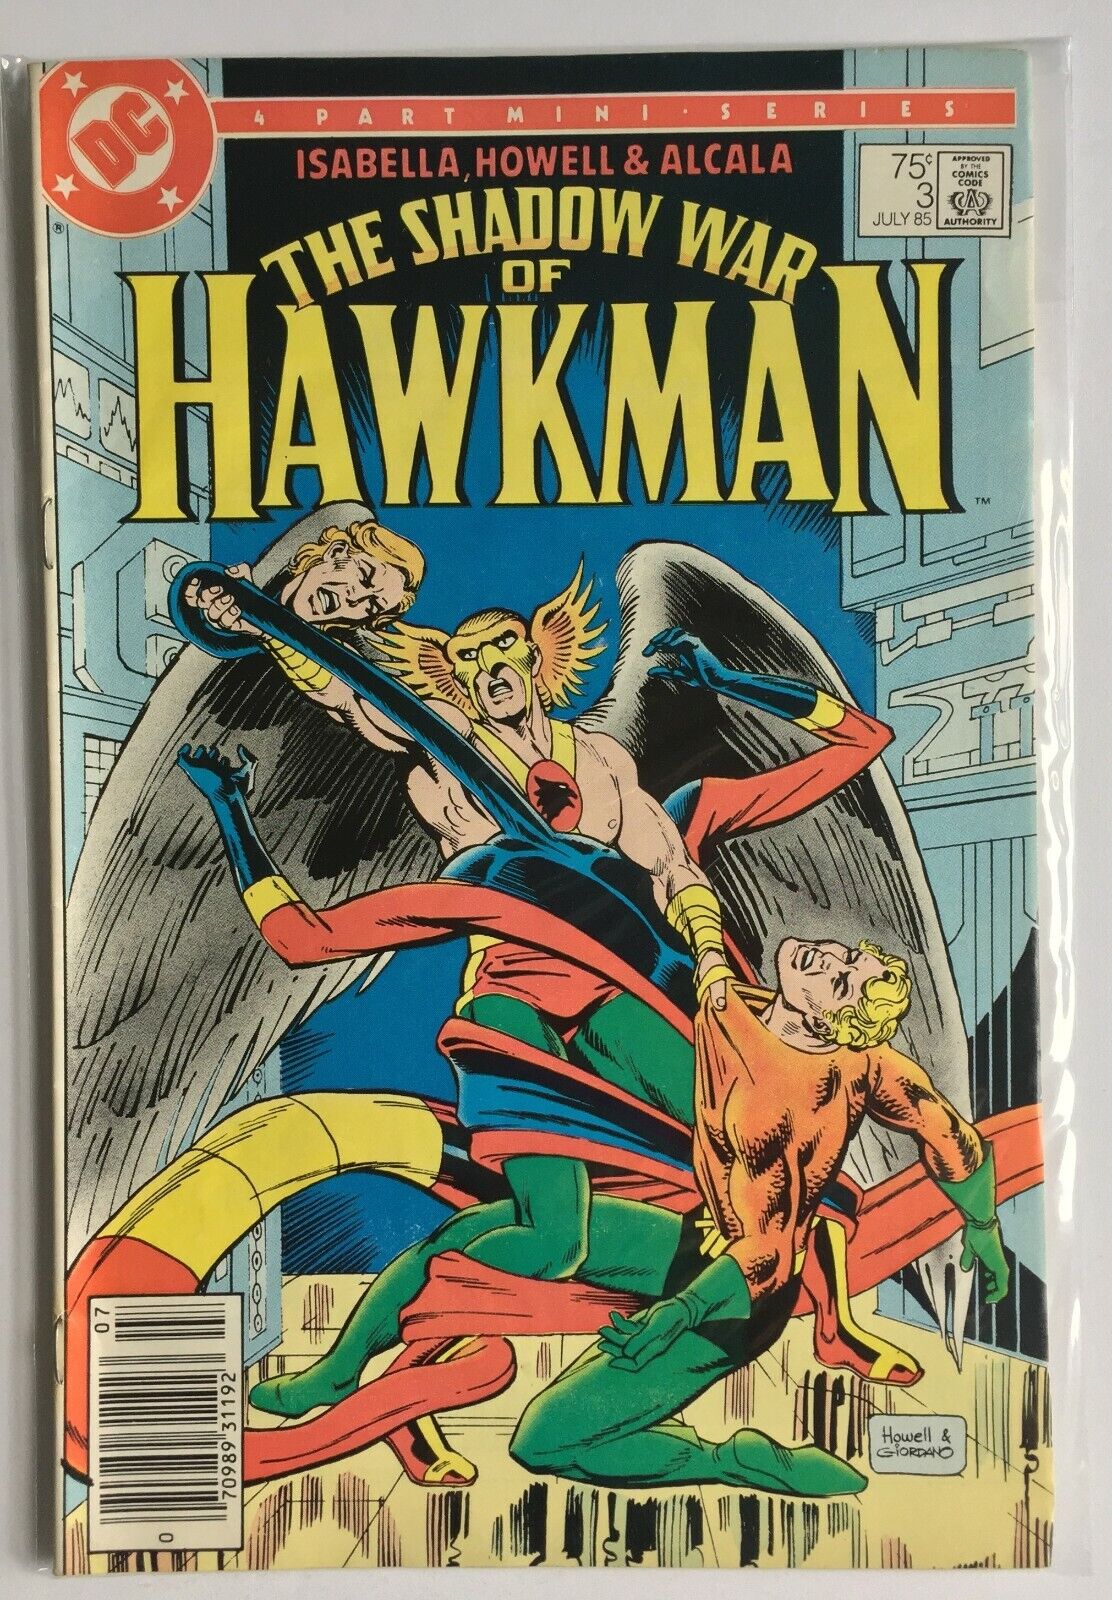 Shadow War of Hawkman #3 (Jul 1985, DC)